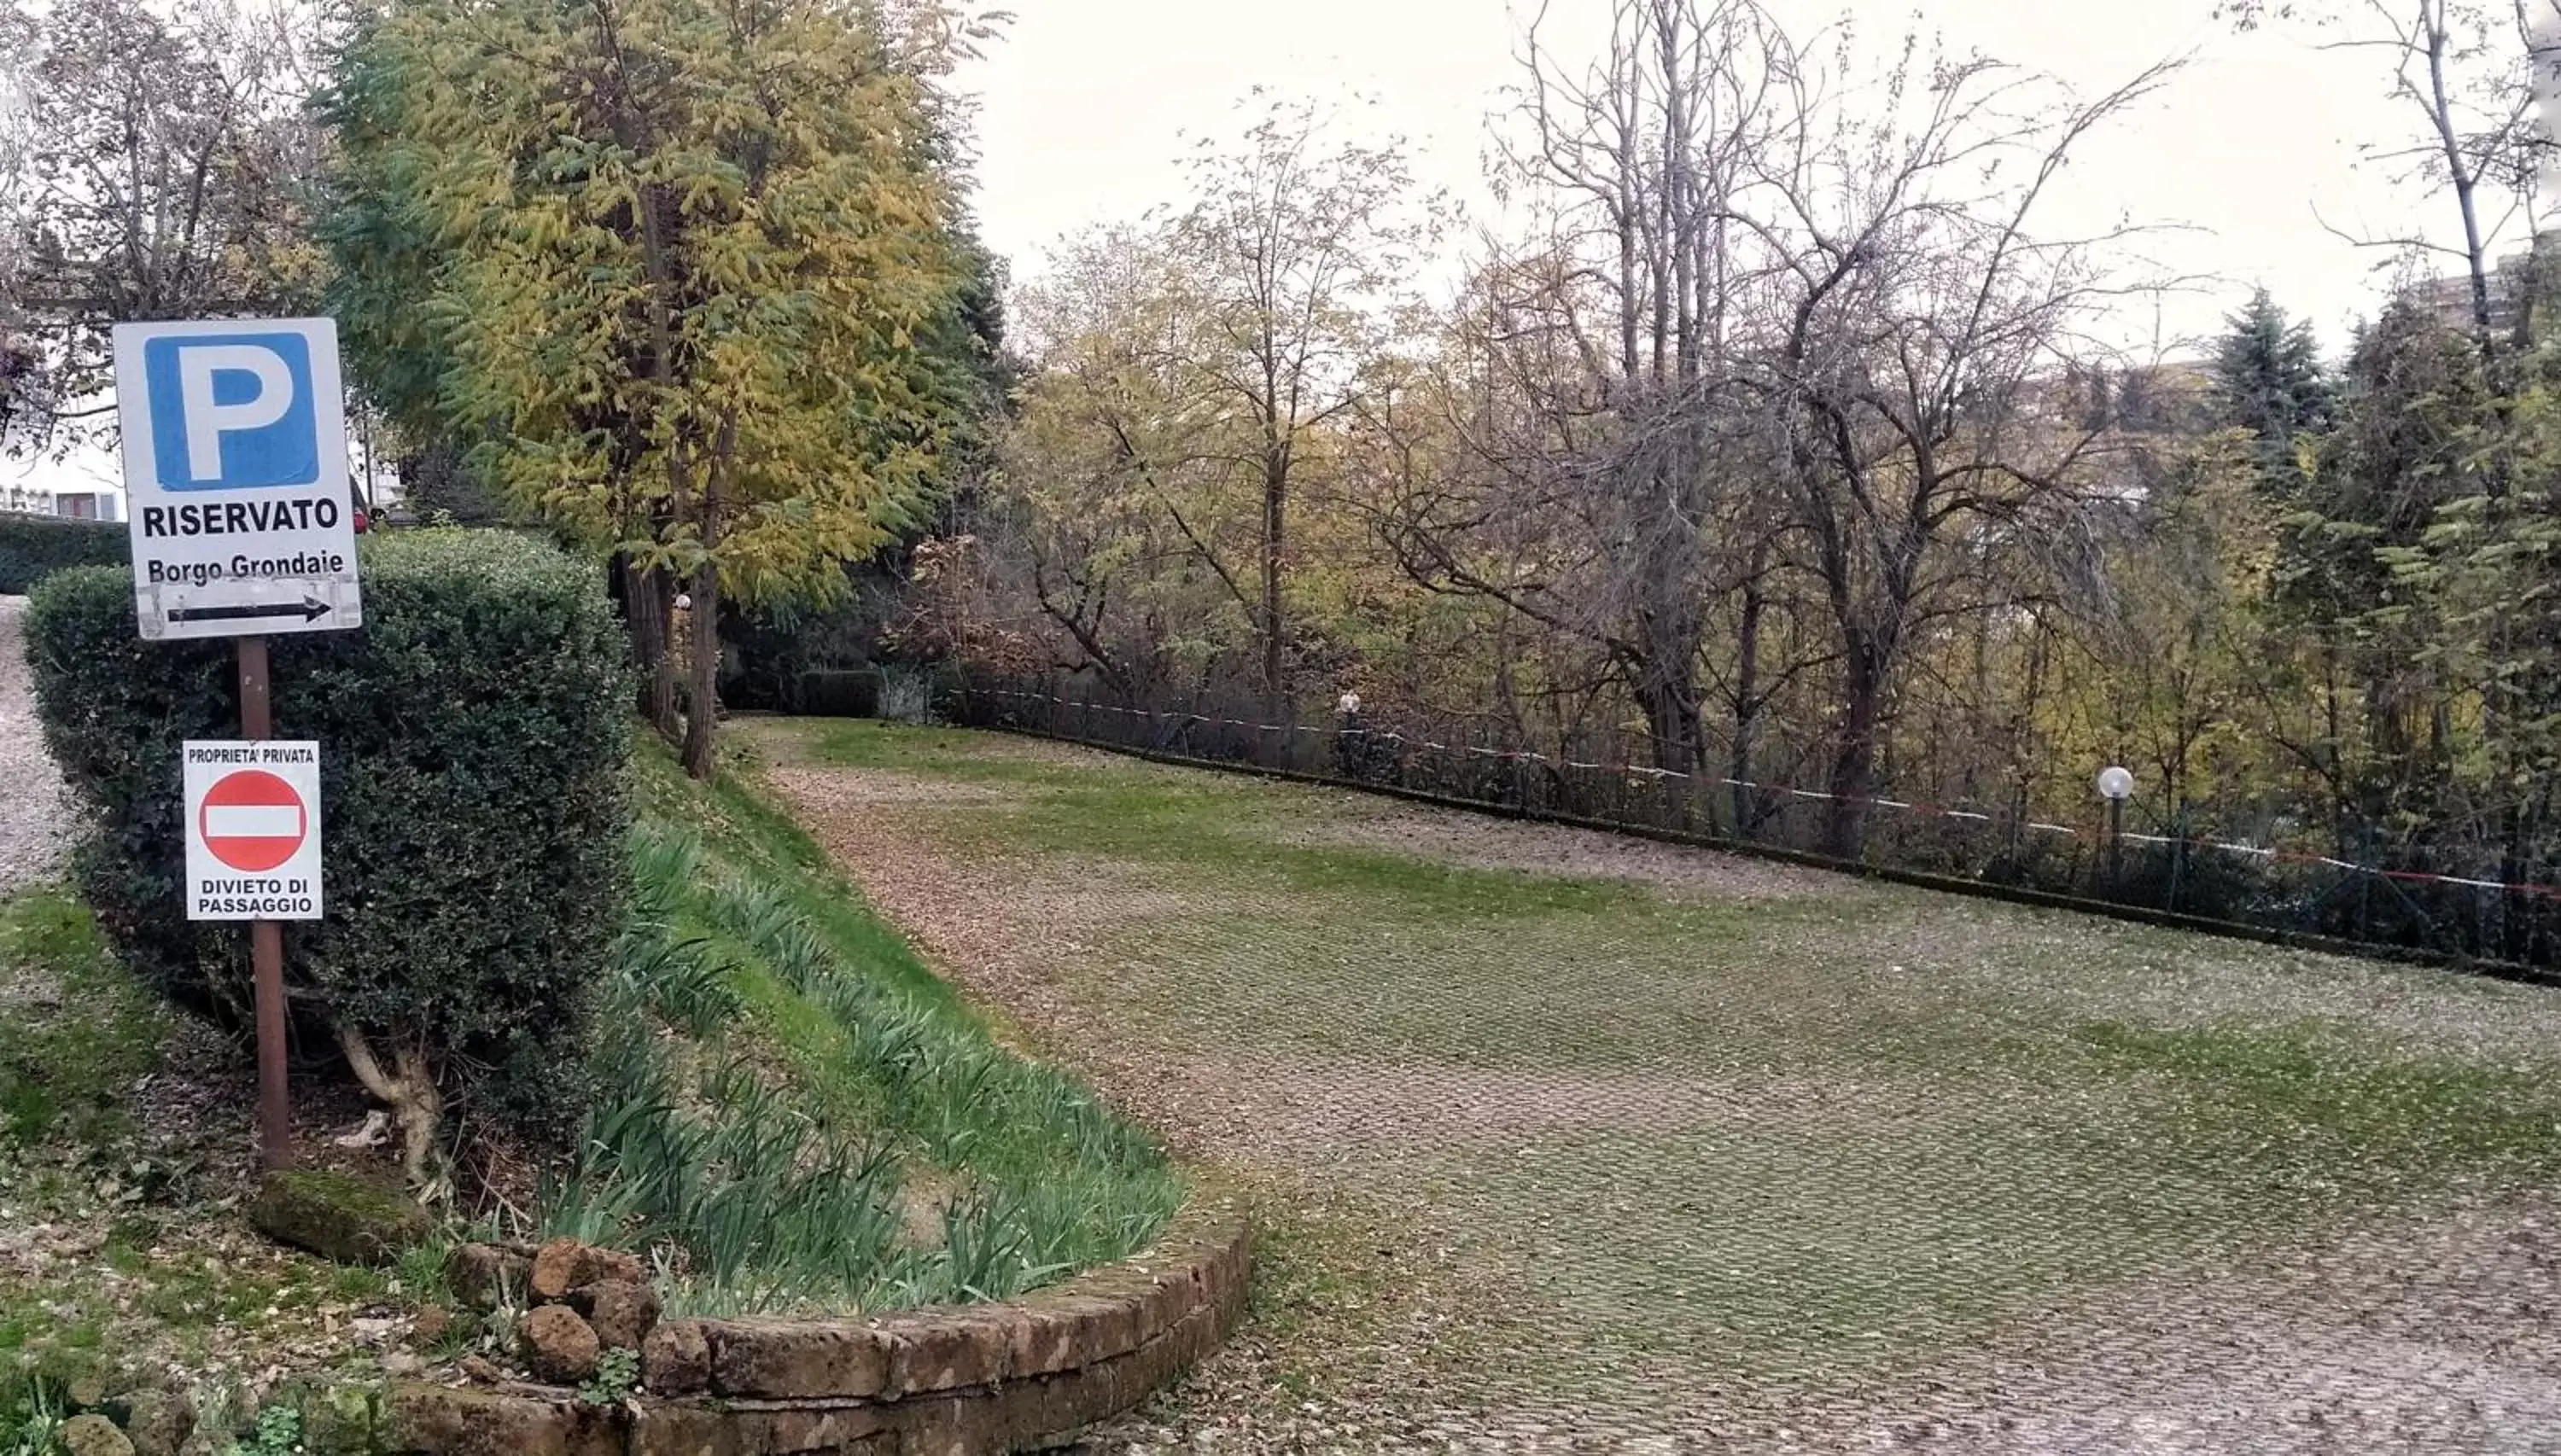 Other, Garden in Borgo Grondaie